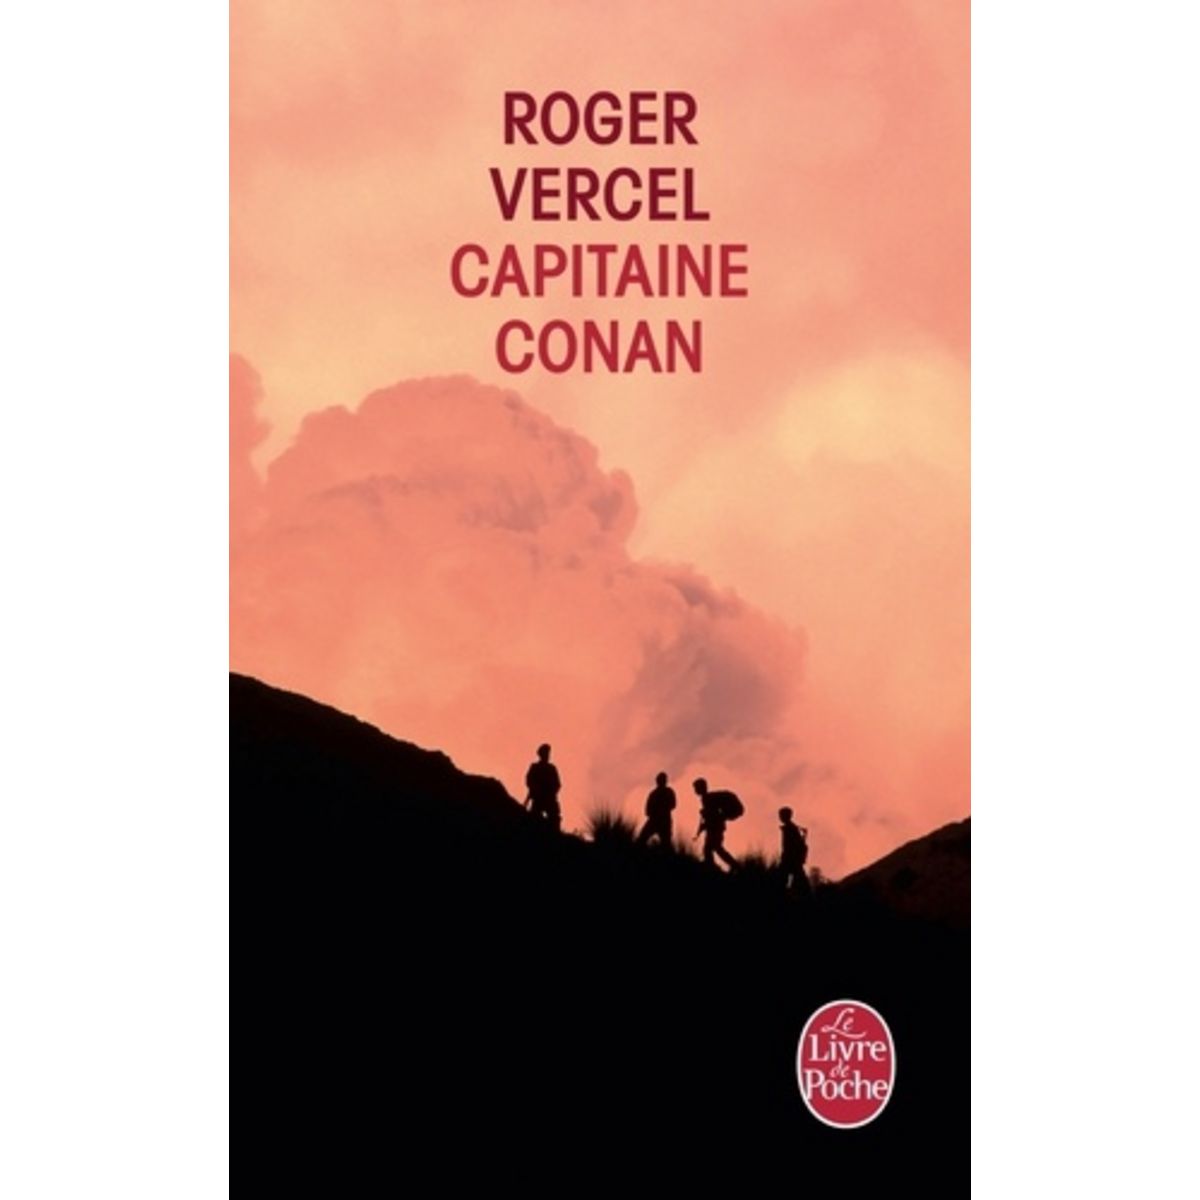  CAPITAINE CONAN, Vercel Roger